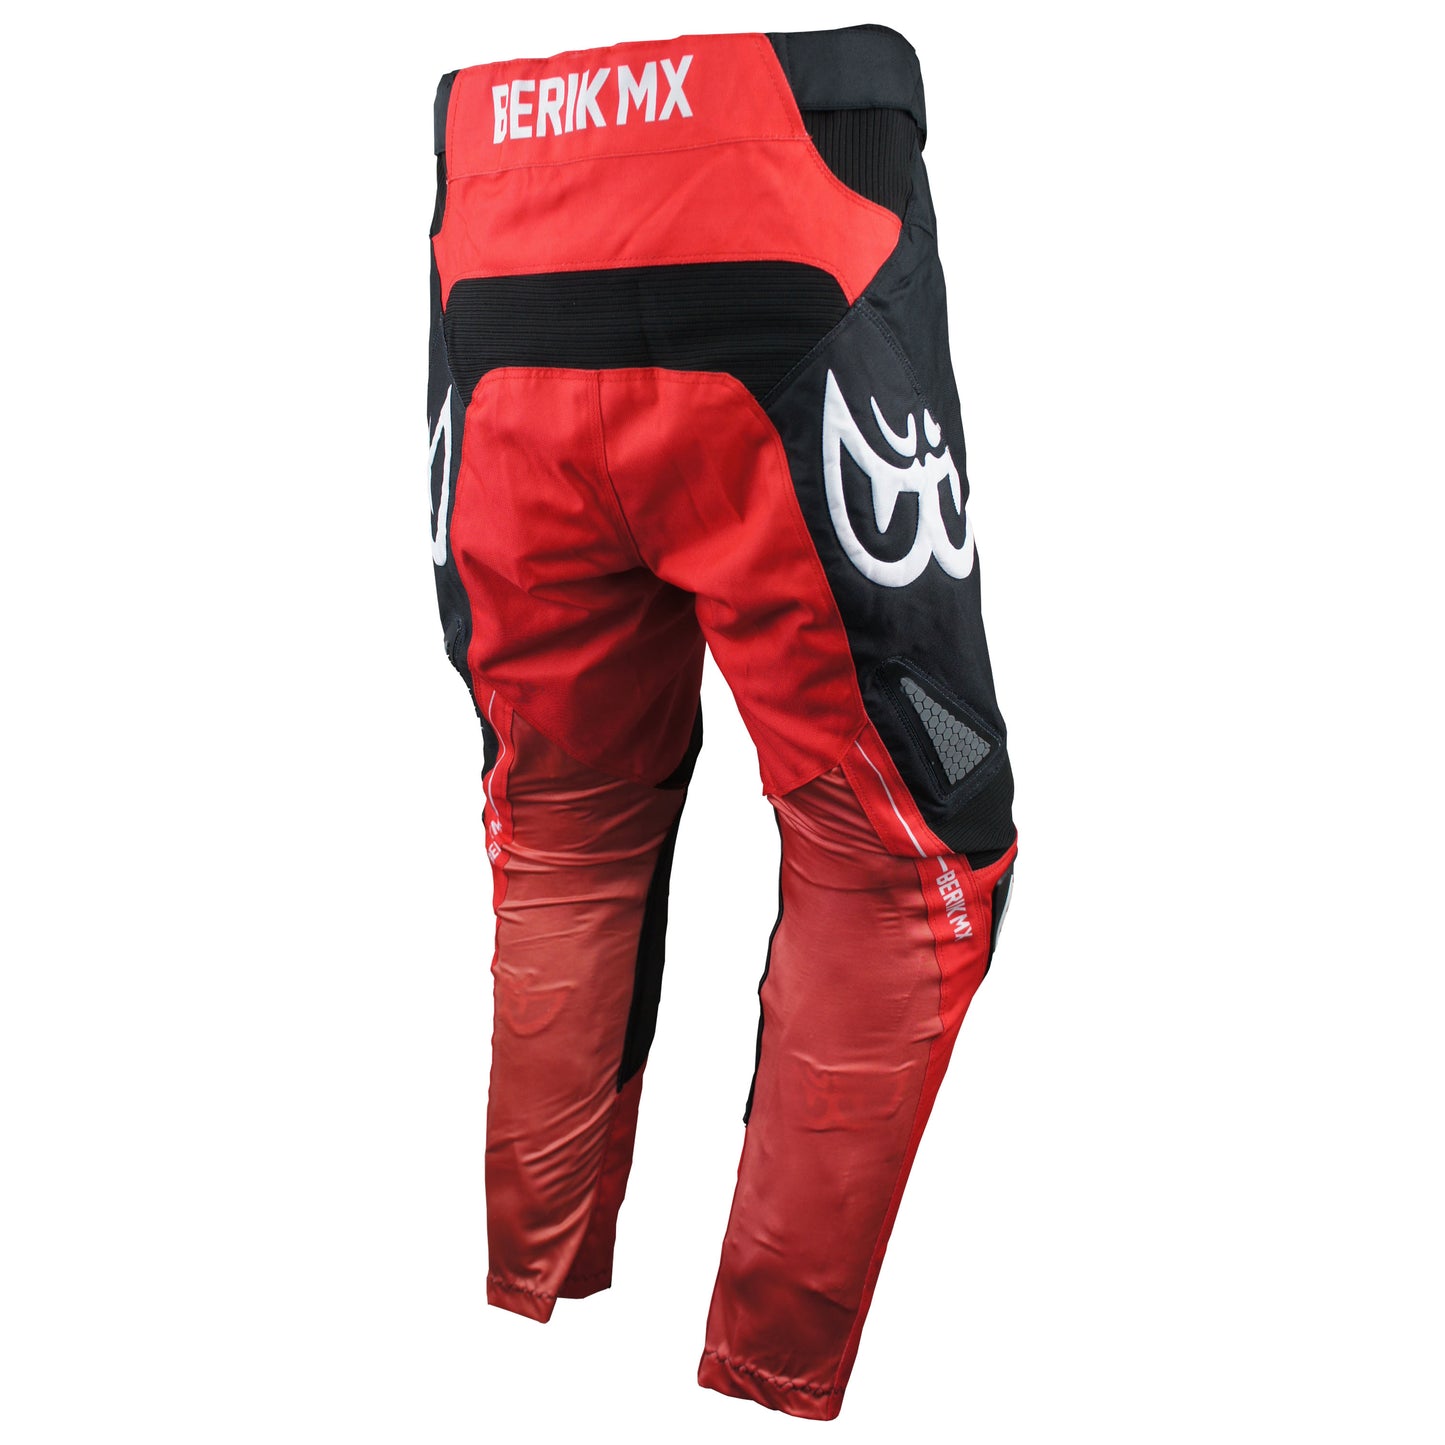 Pre-order sale JP-227311-BK RED BERIK MX pants